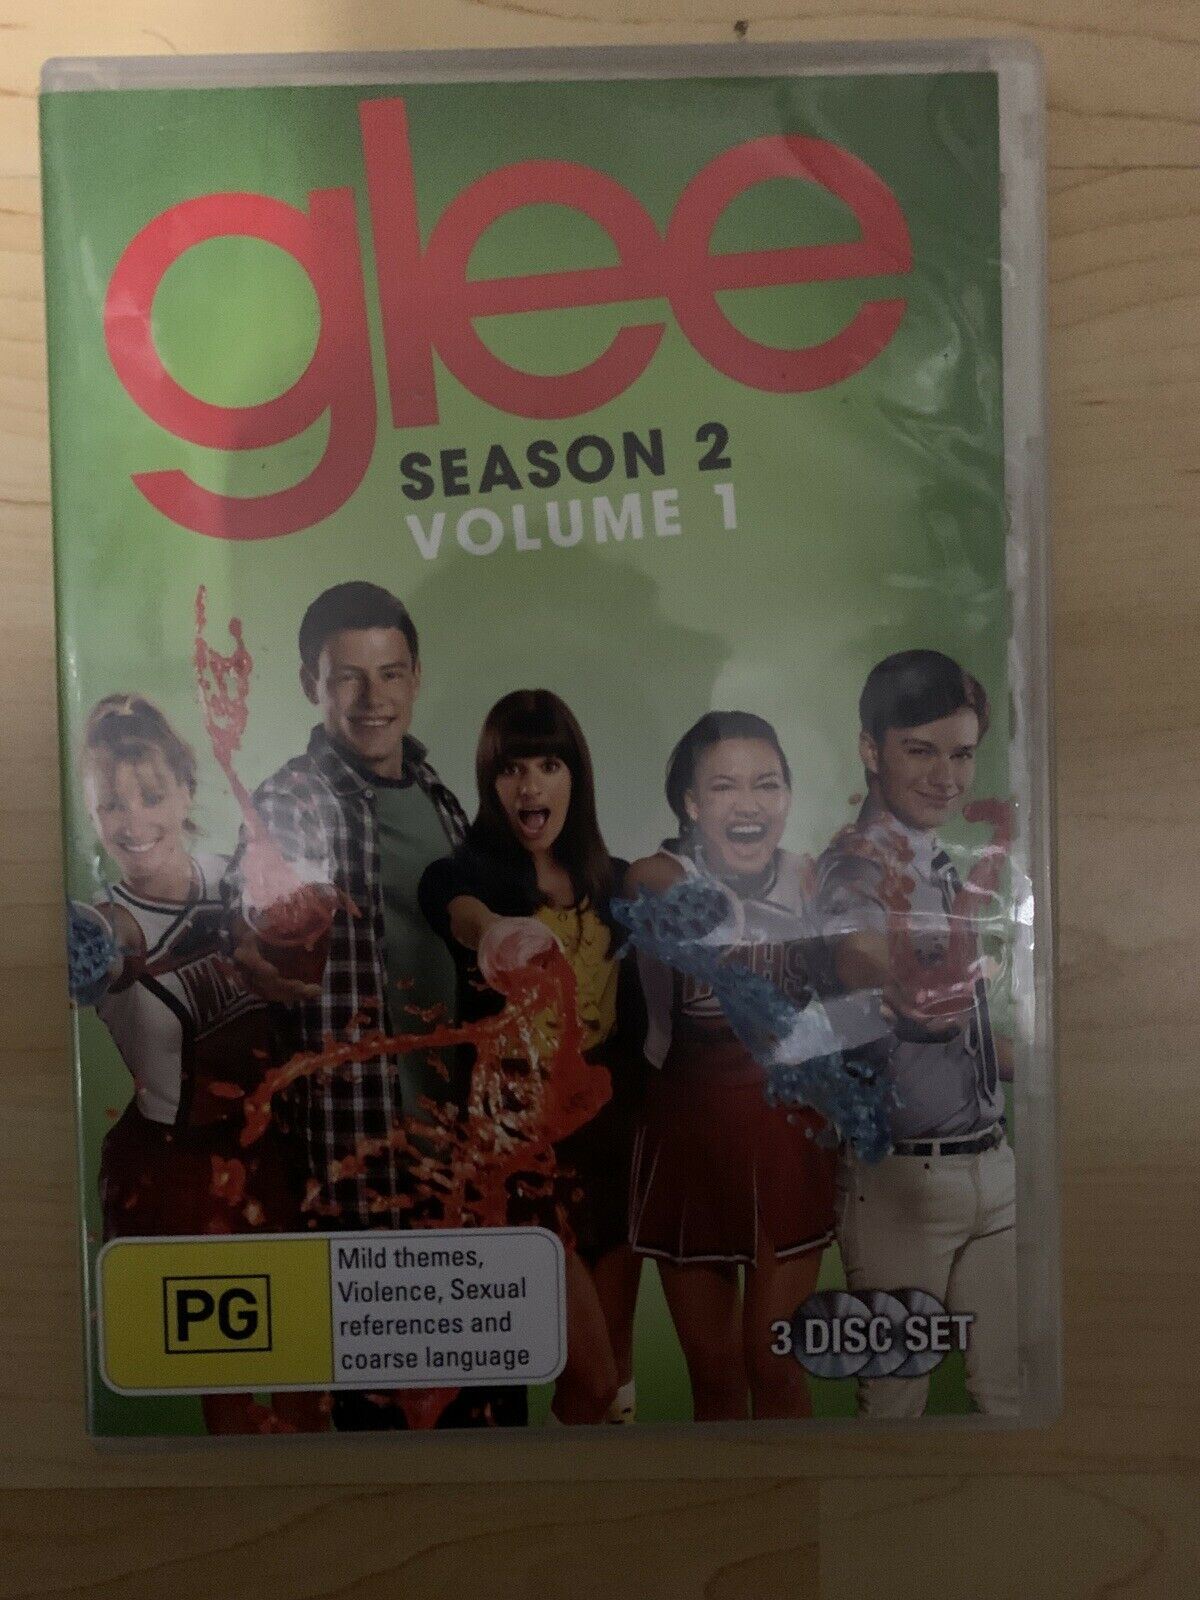 Glee : Season 1-2 (DVD) Region 4 - Comedy Musical TV Series